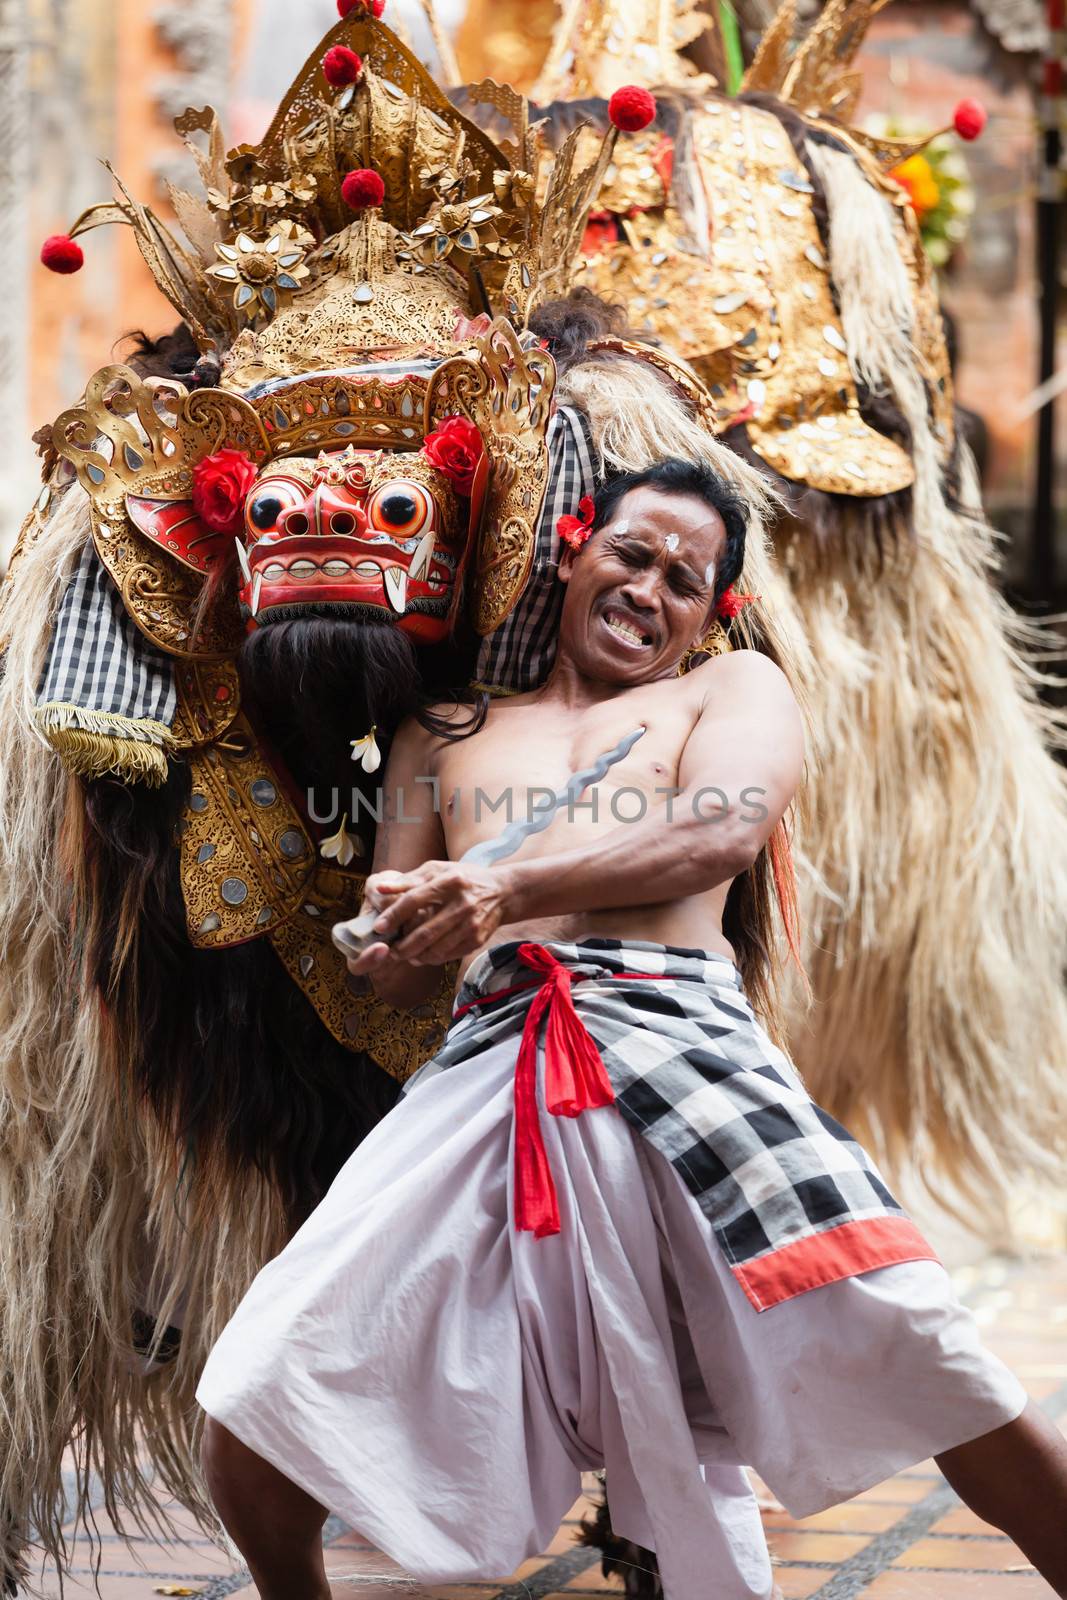 Barong and Kris Dance perform, Bali, Indonesia by iryna_rasko